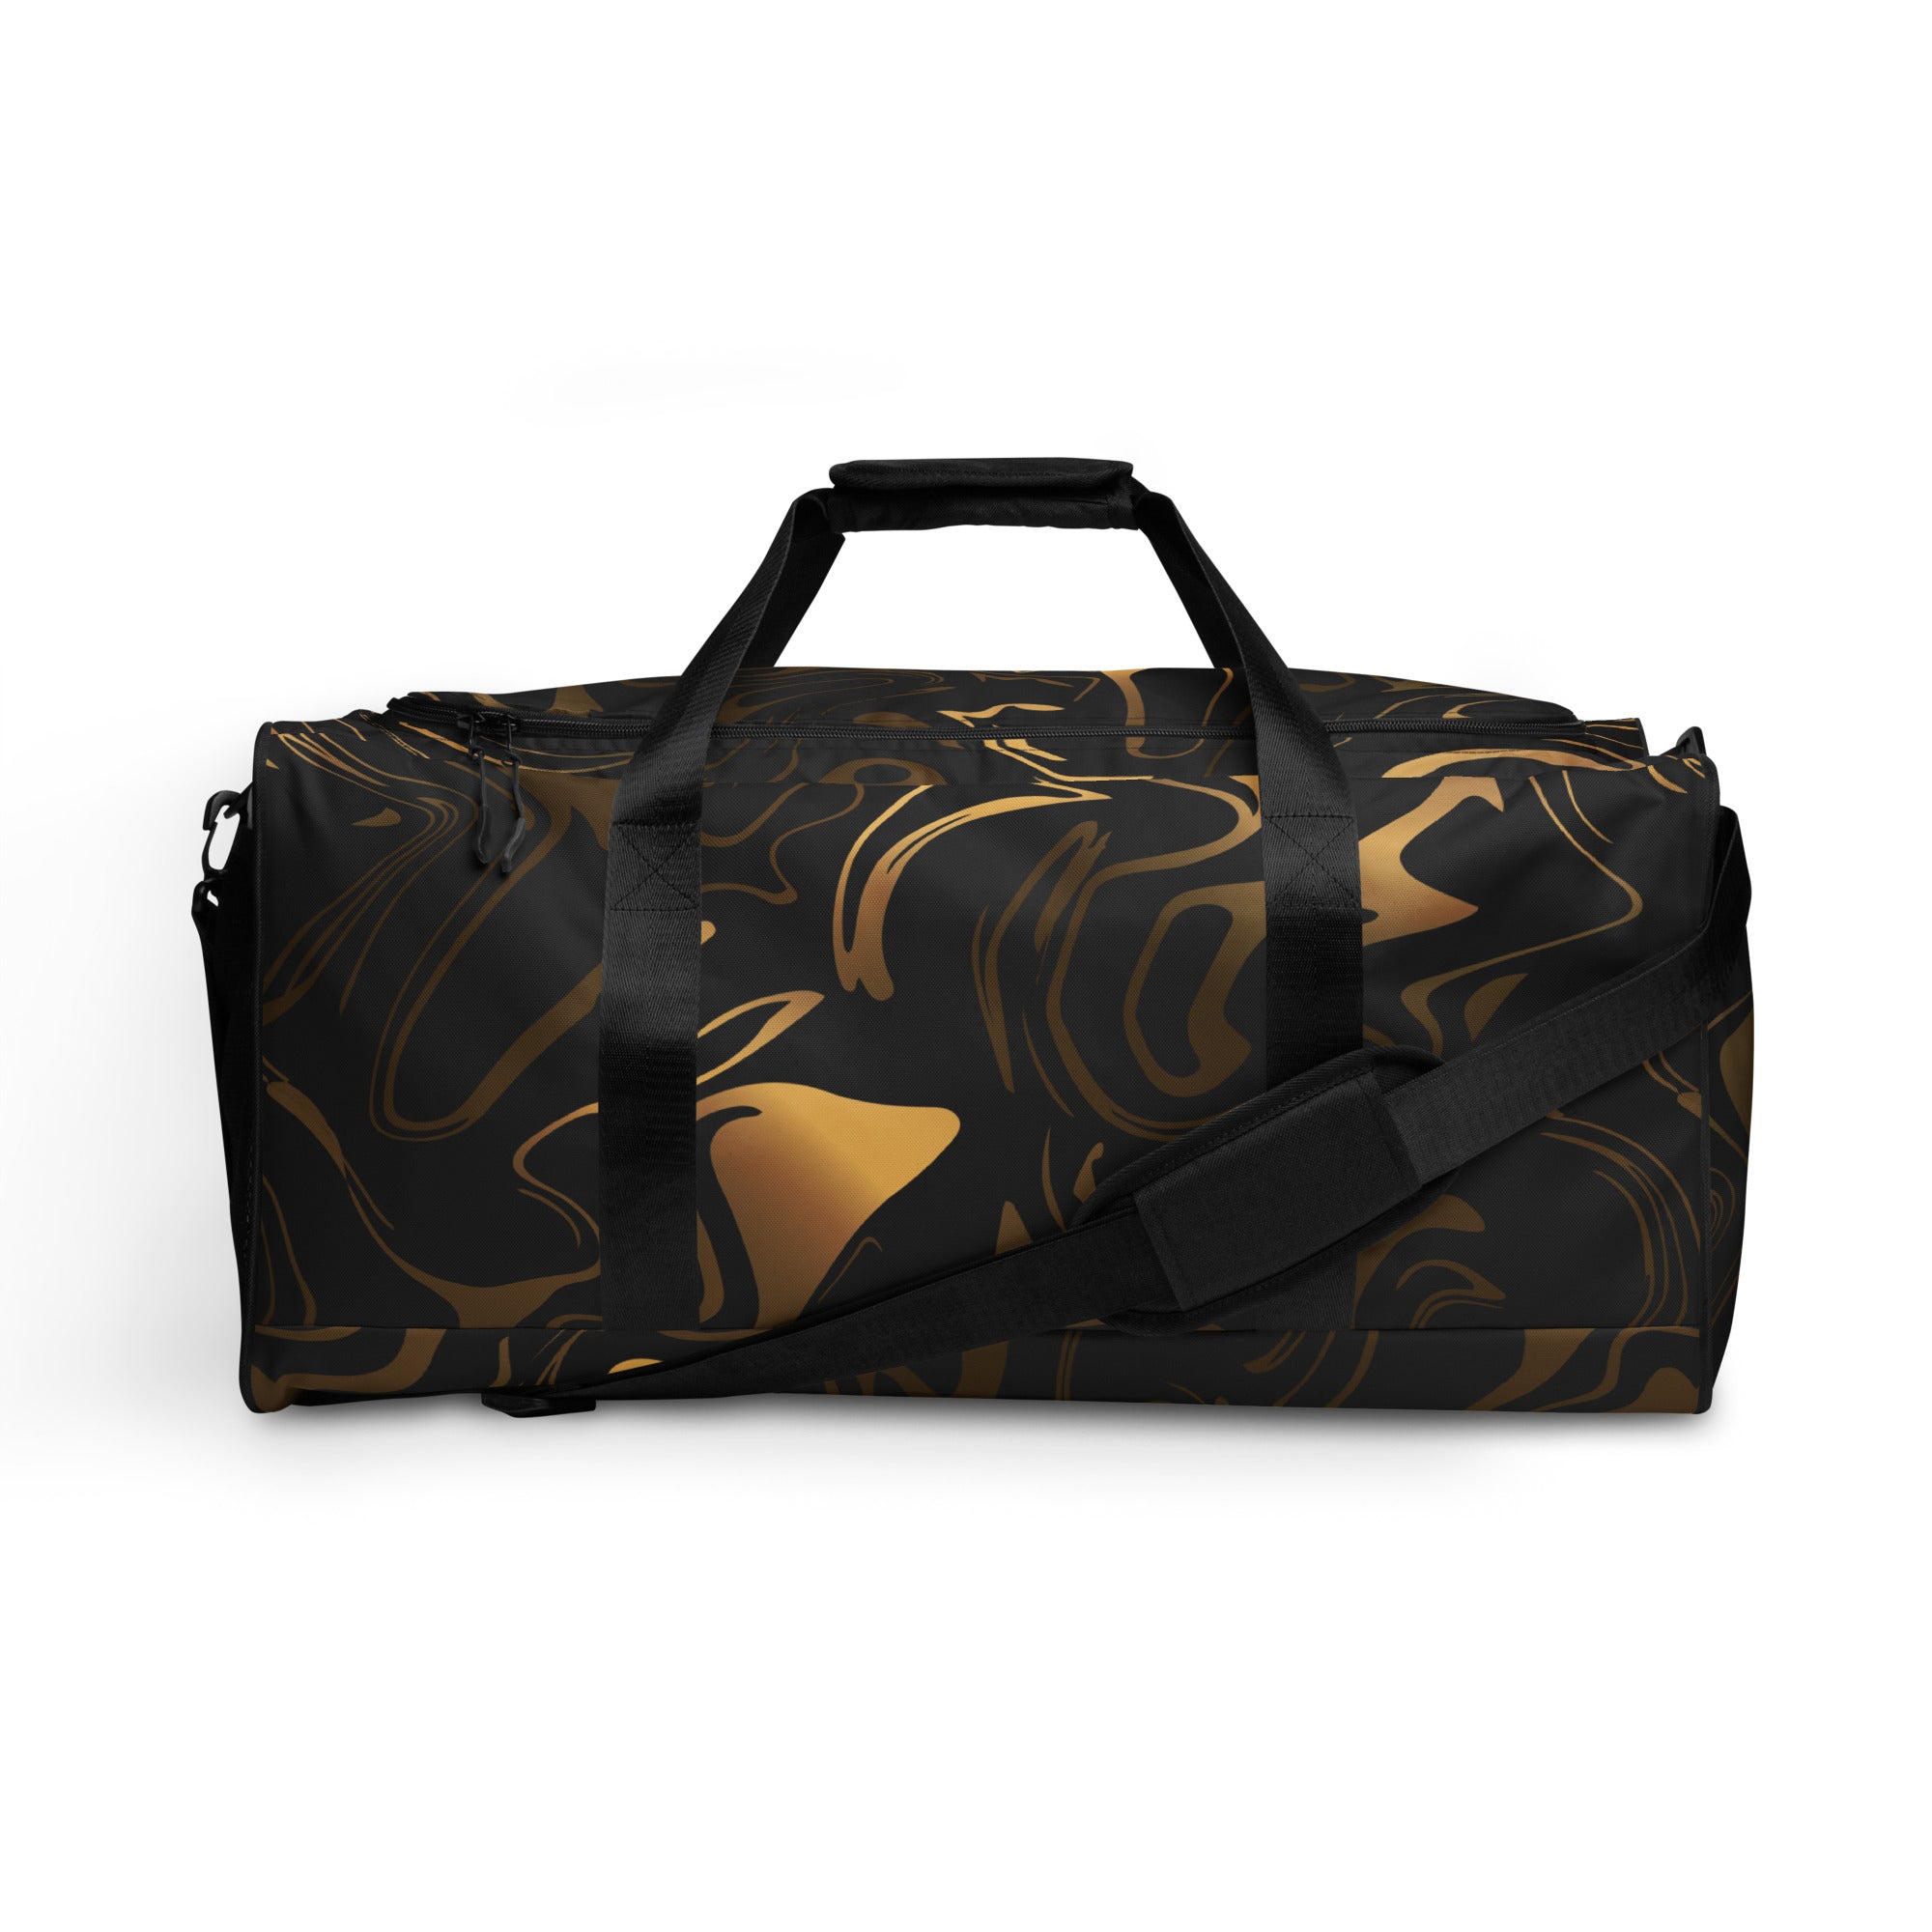 Black & Gold Duffle Bag